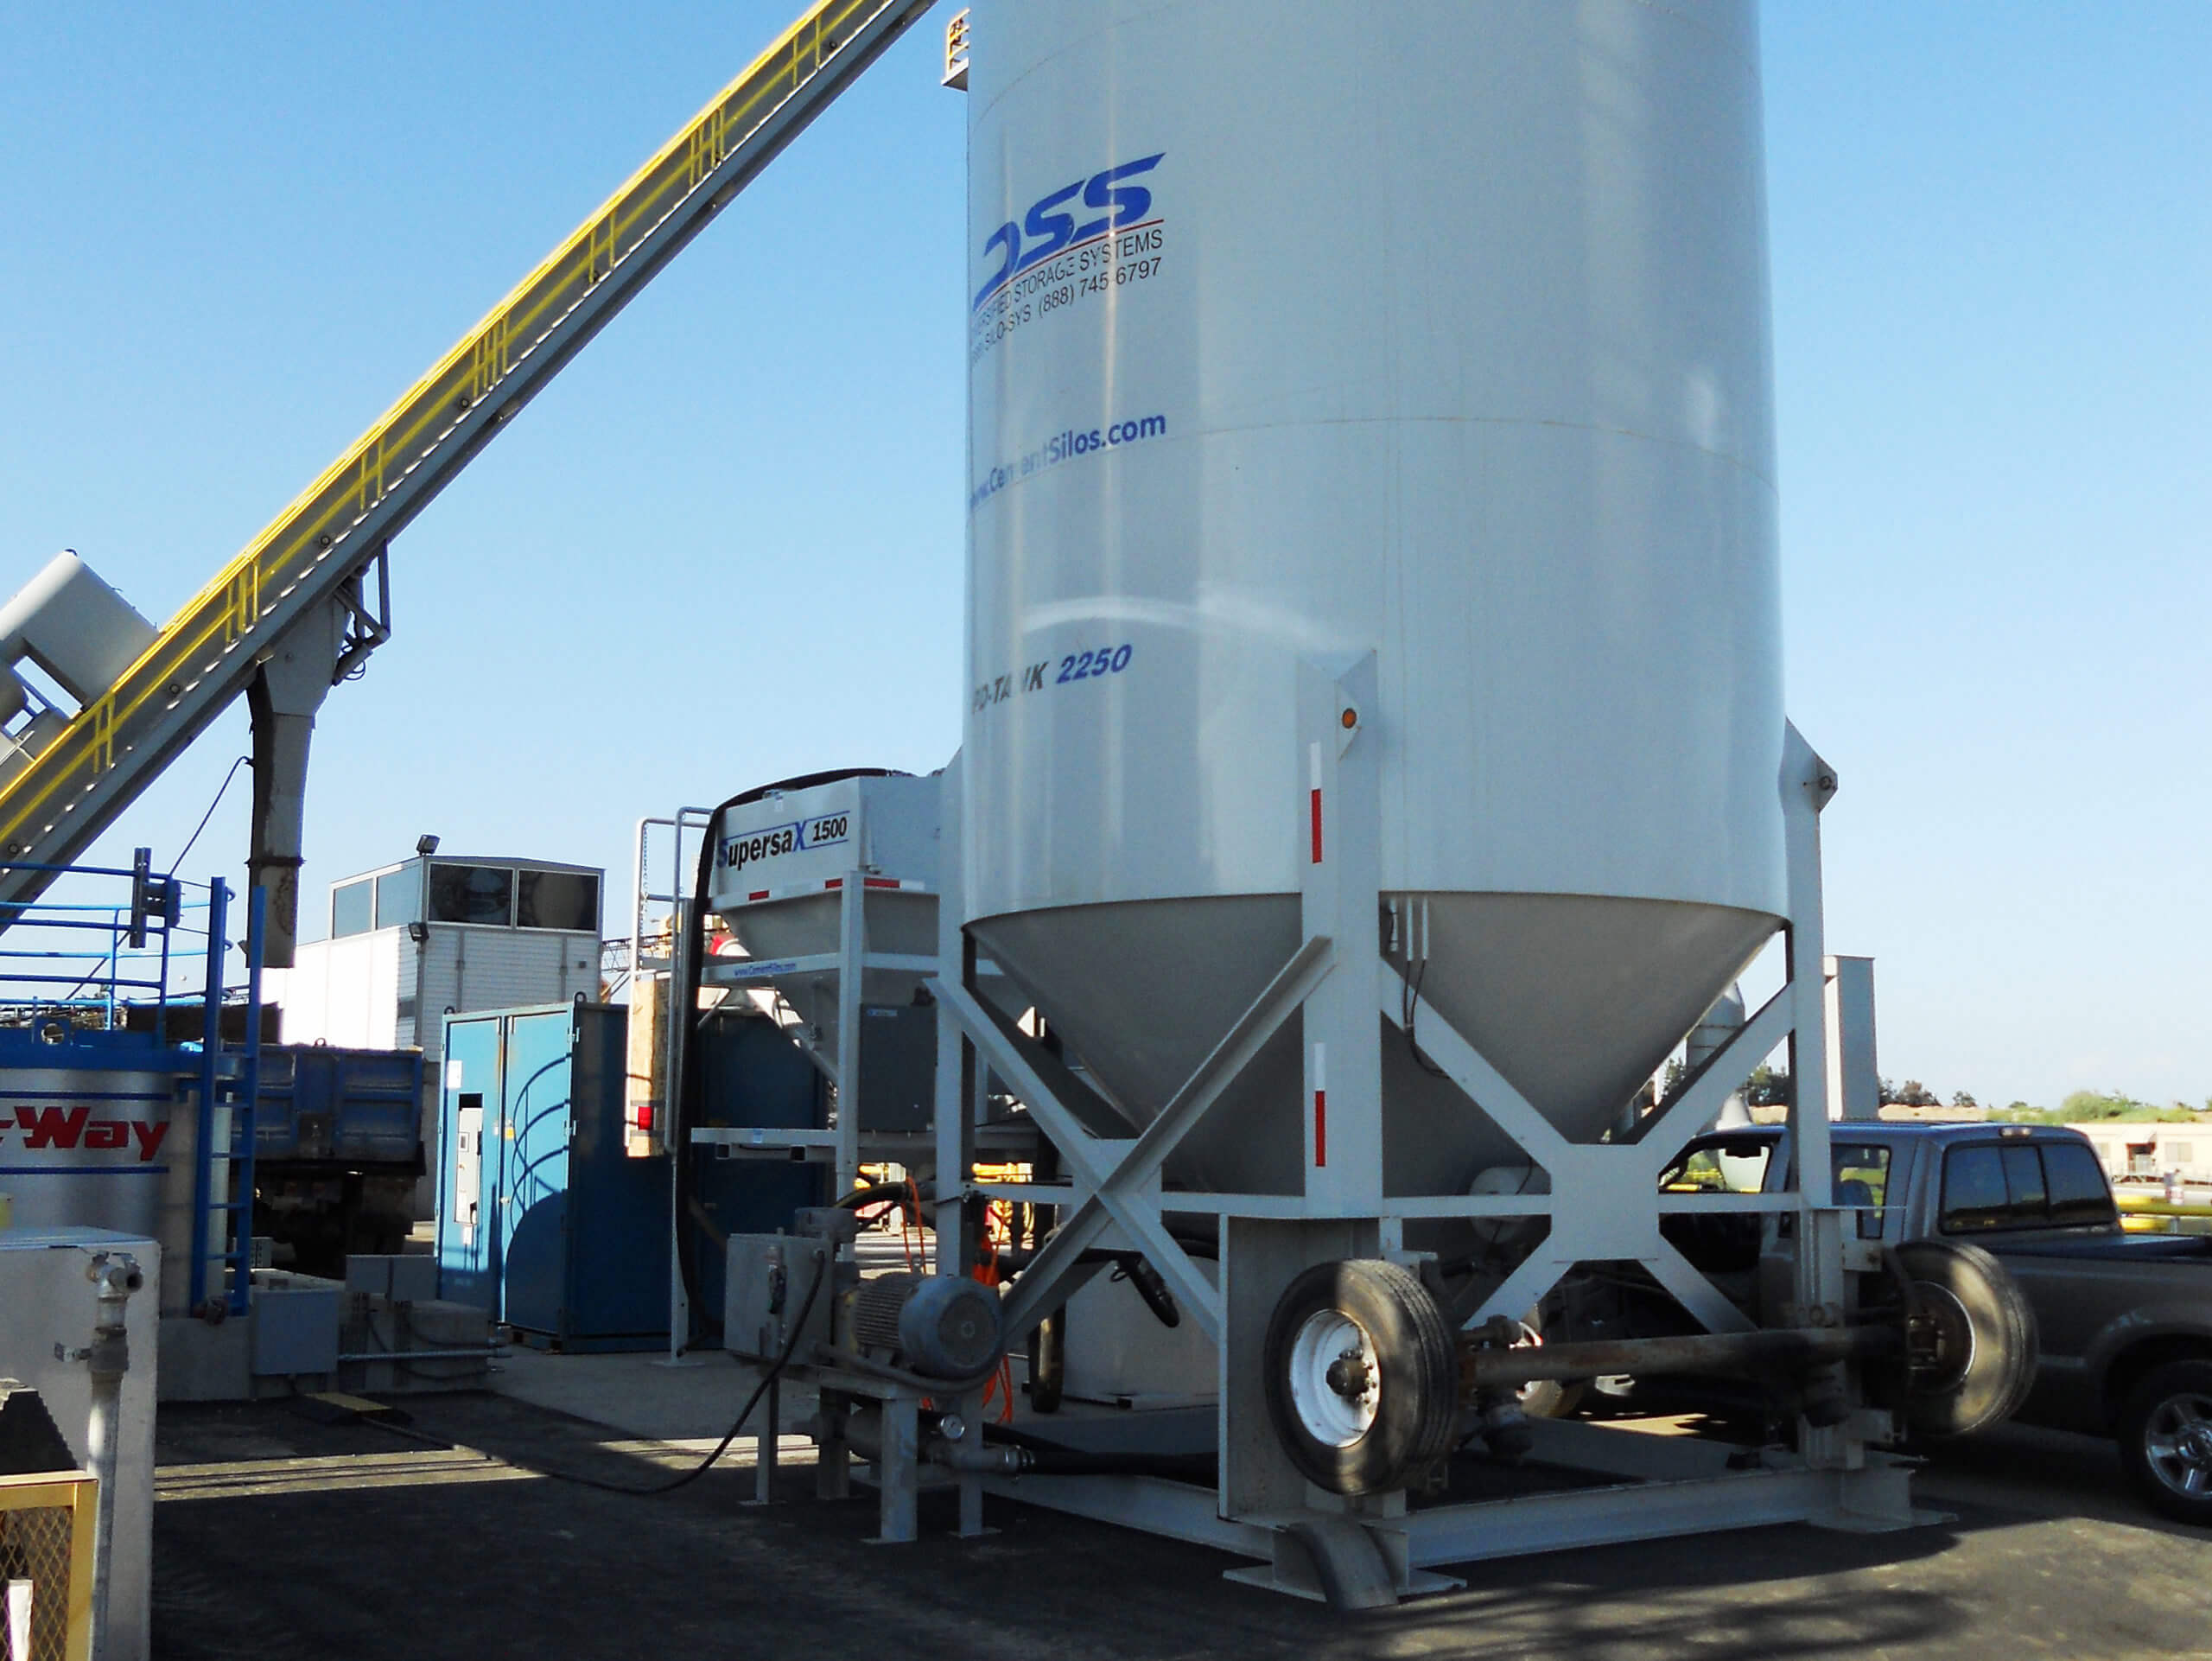 pd tank 2200 storage asphalt plant process silo scaled